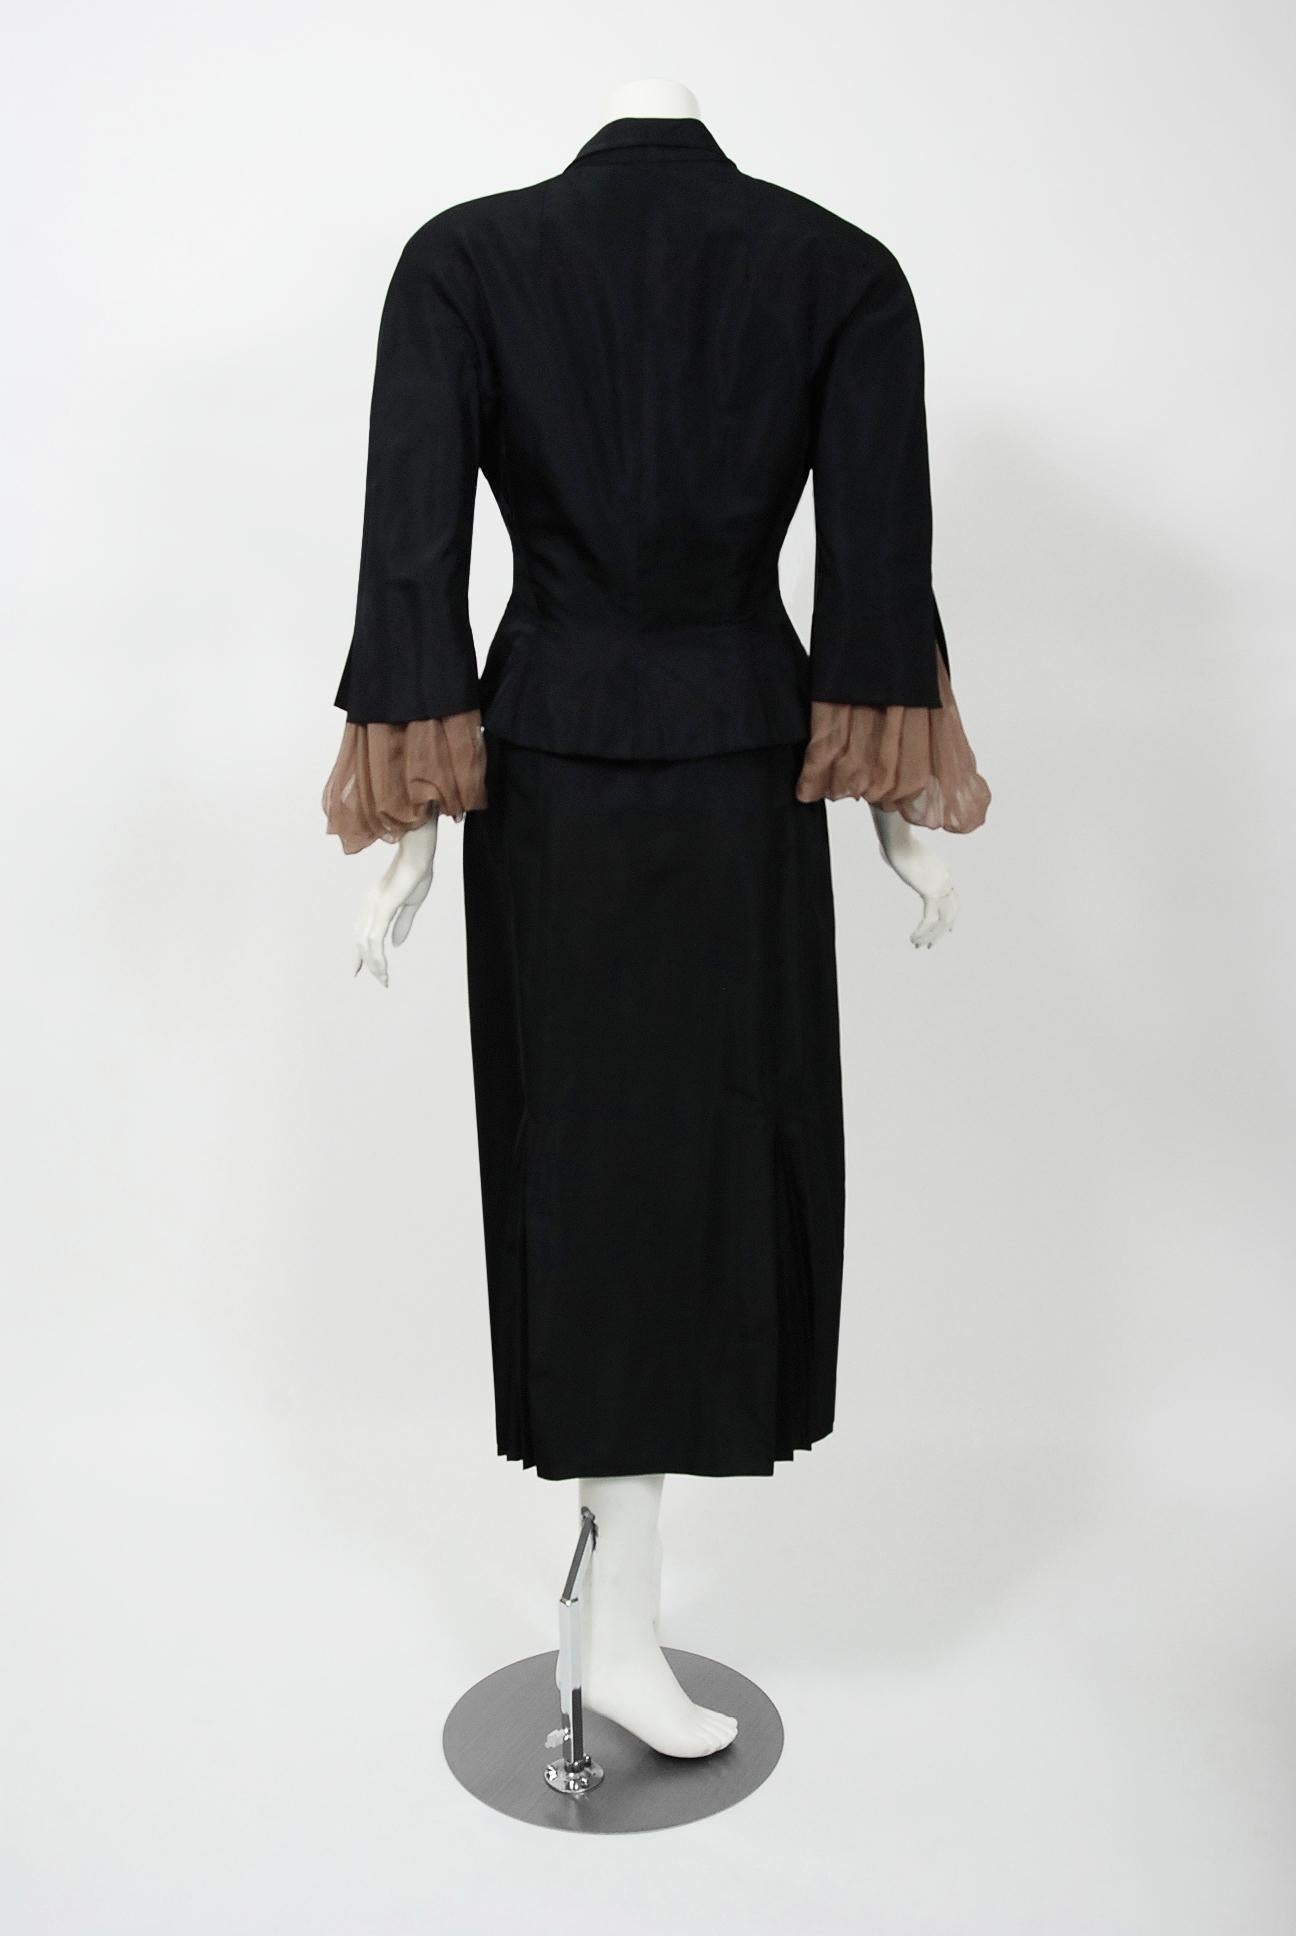 Vintage 1950s Pierre Balmain Black and Nude Silk Dress w/ Billow-Sleeve Jacket  3